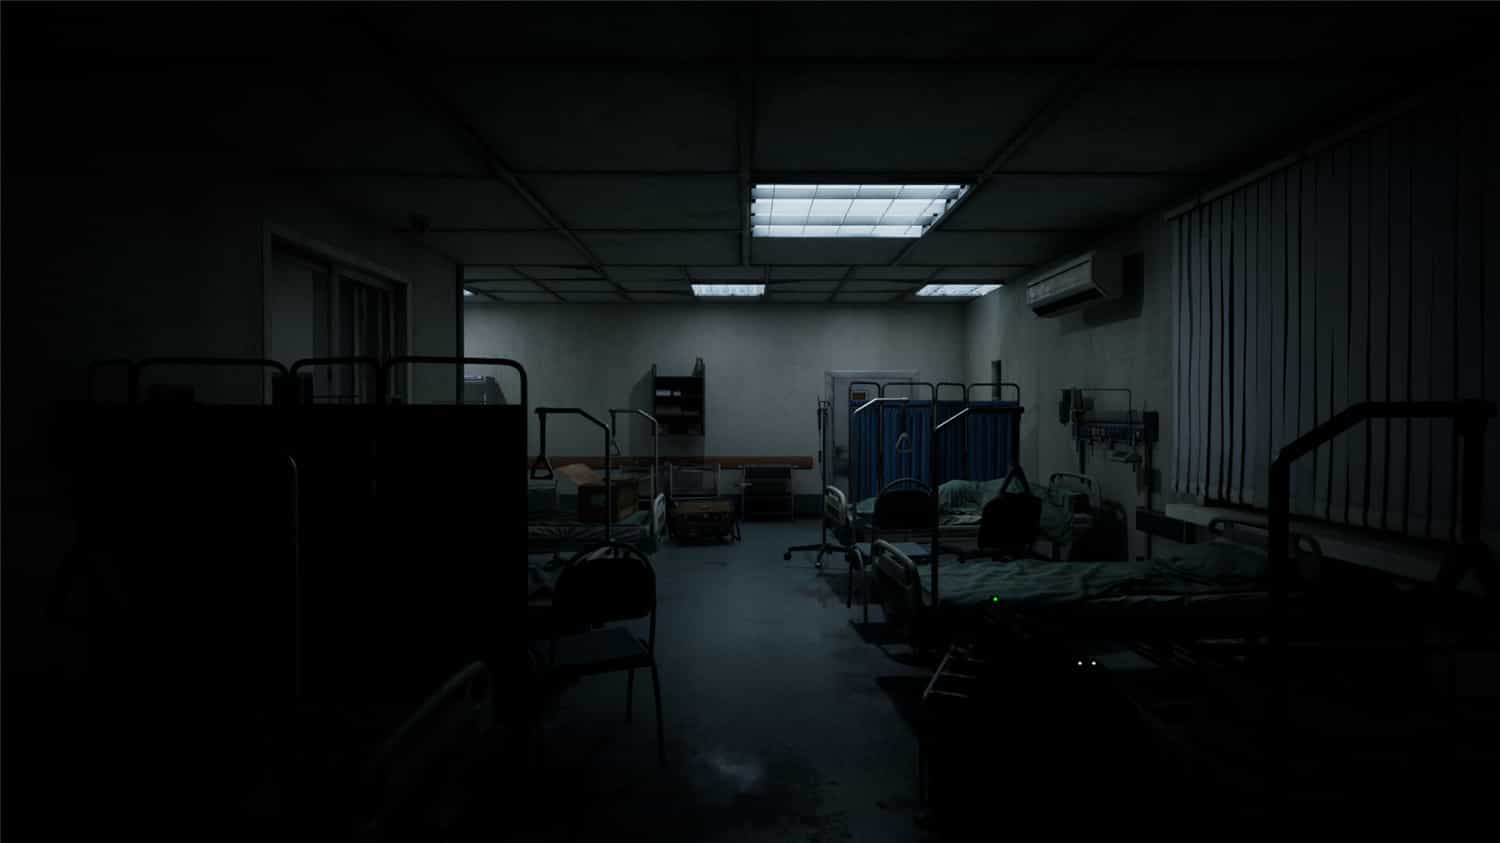 亡灵医院/Hospital of the Undead v1.0.0 官方简体中文 3.77GB插图3